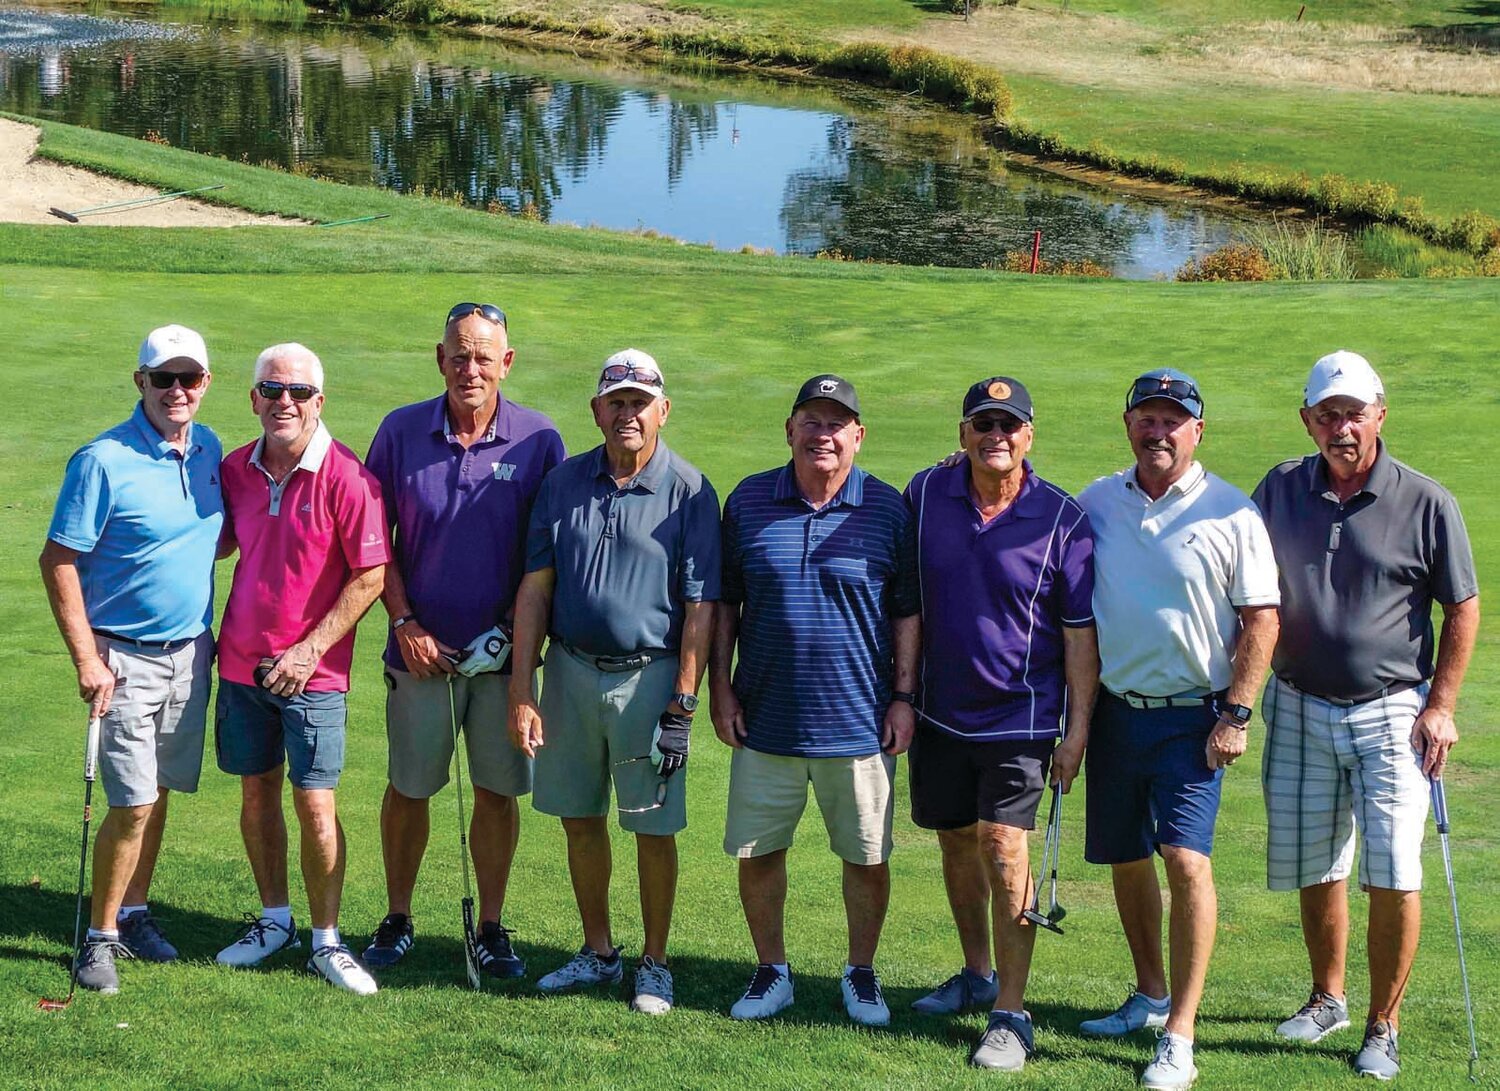 Members of the Golf Binge members traveling to Oregon were, left to right: Don Valentini, Lance Stark, Scott McDonald, Ellis Nierenberg, Bob Matson, Tom Fagerholm, Ray Wilson, and Matt Froman.
COURTESY OF LANCE STARK